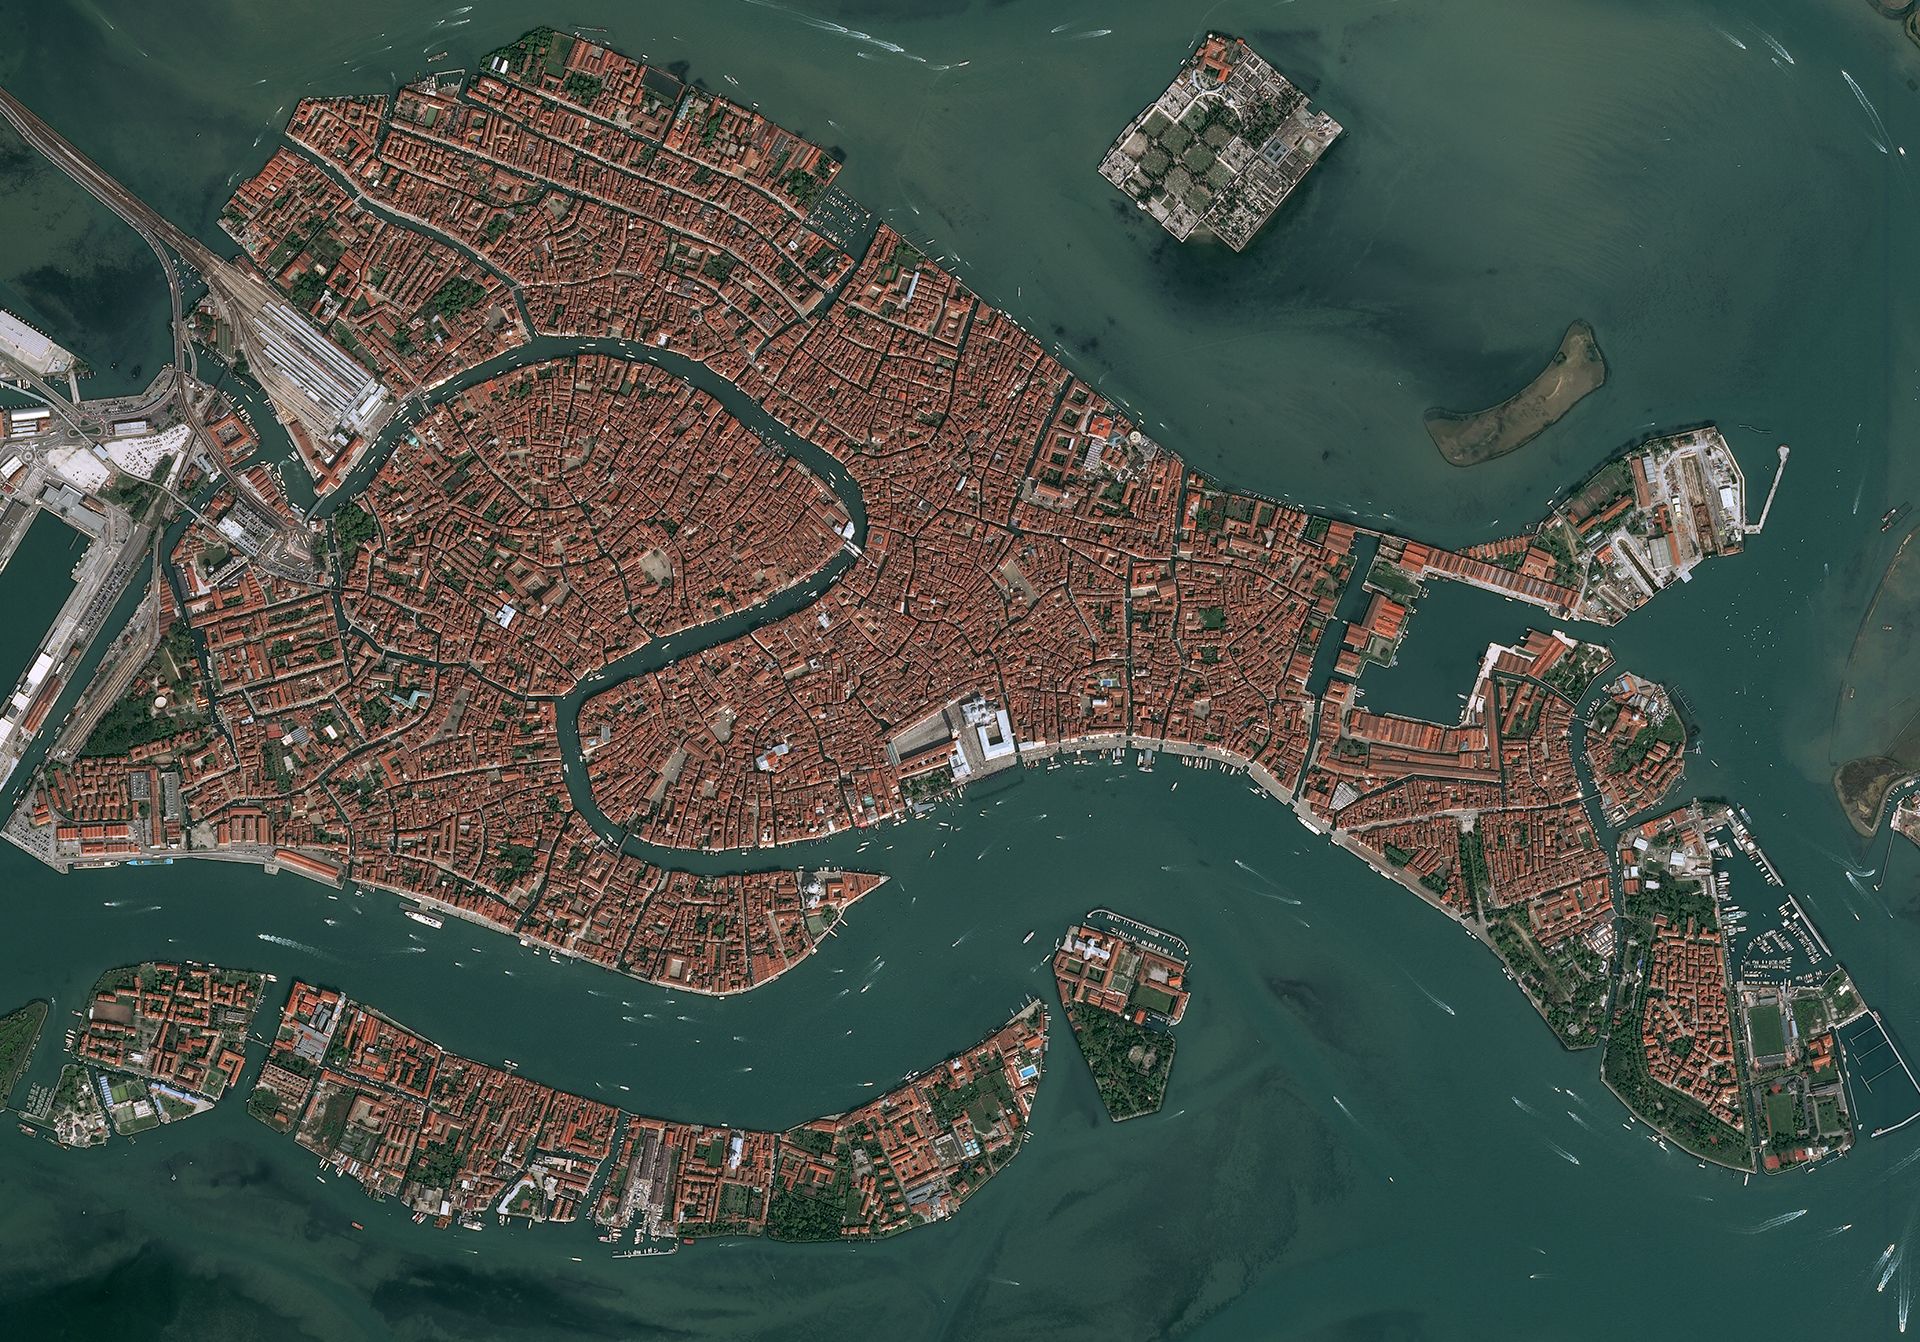 Pleiades - Venise - Satellite - Grand canal - Piazza San Marco - Rialto - Pont des soupirs